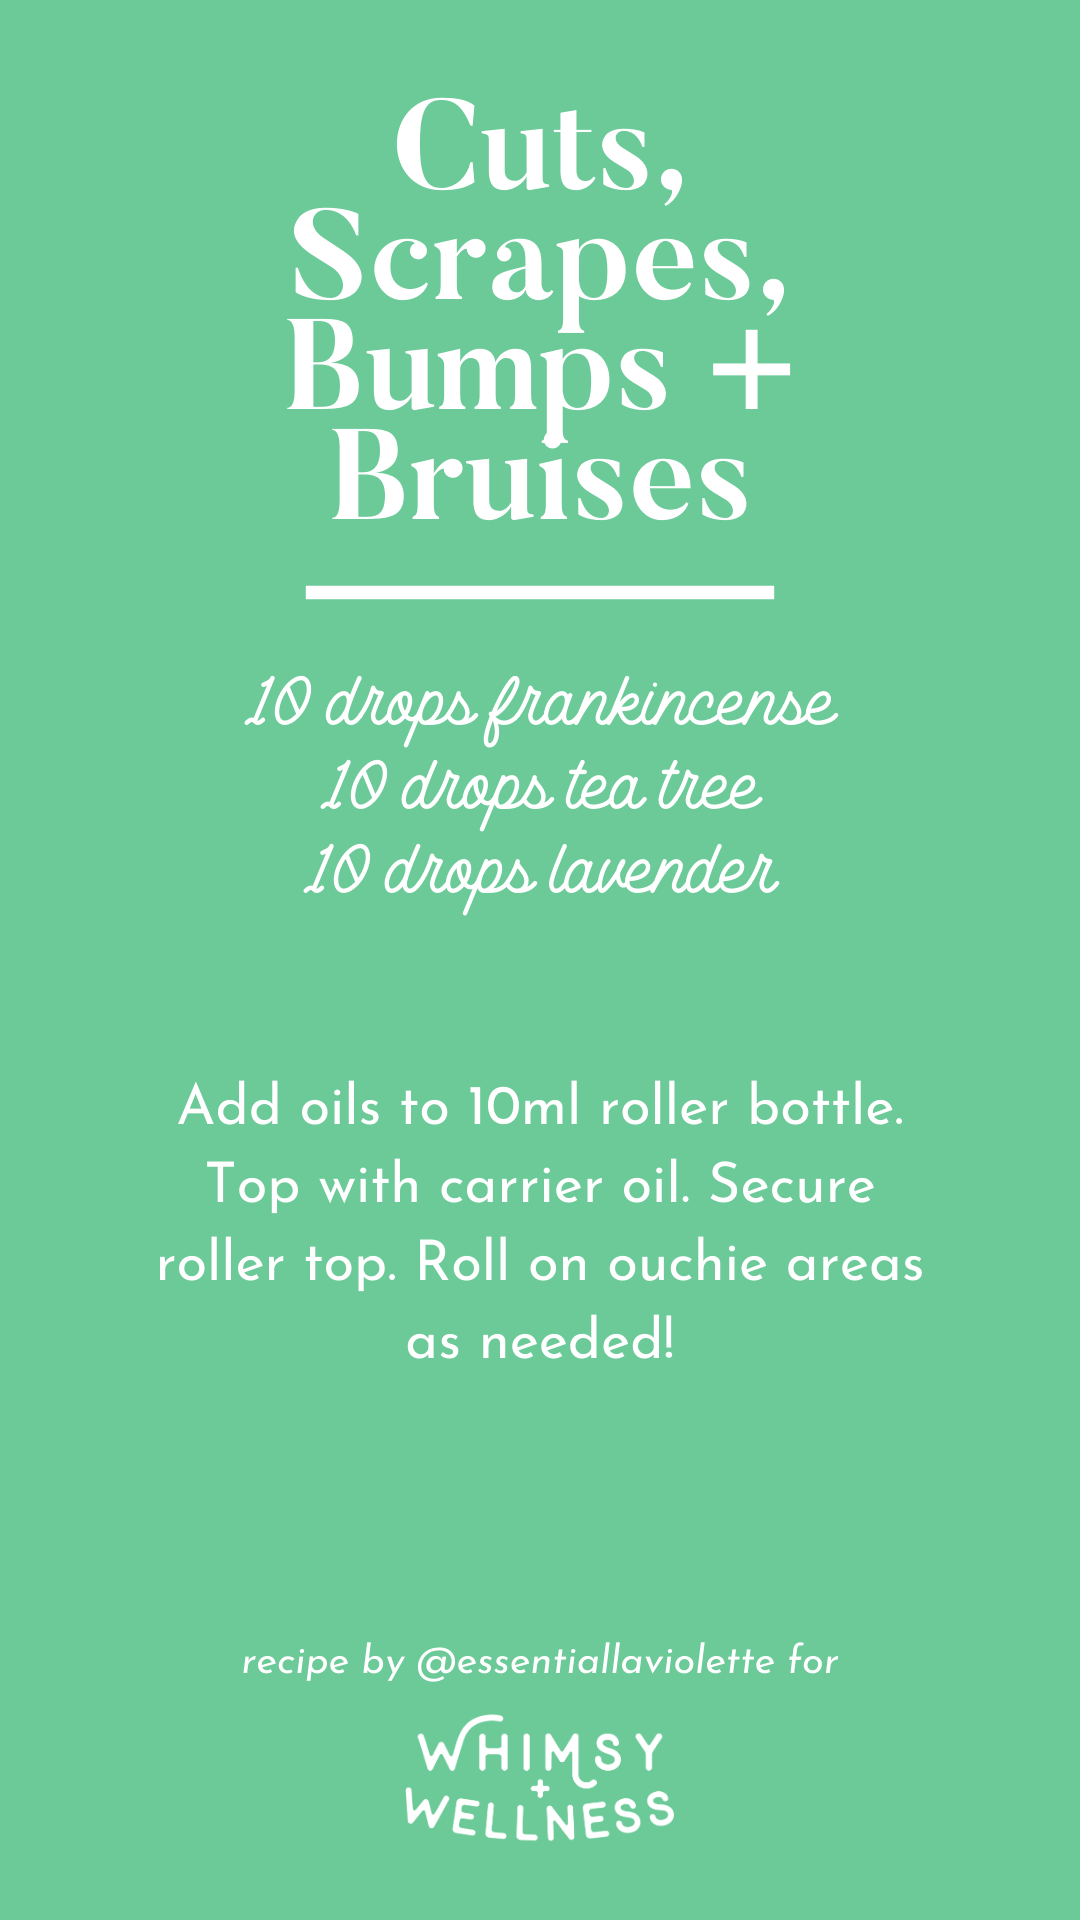 Summertime cuts, scrapes, bumps + bruises roller bottle recipe using doTERRA essential oils